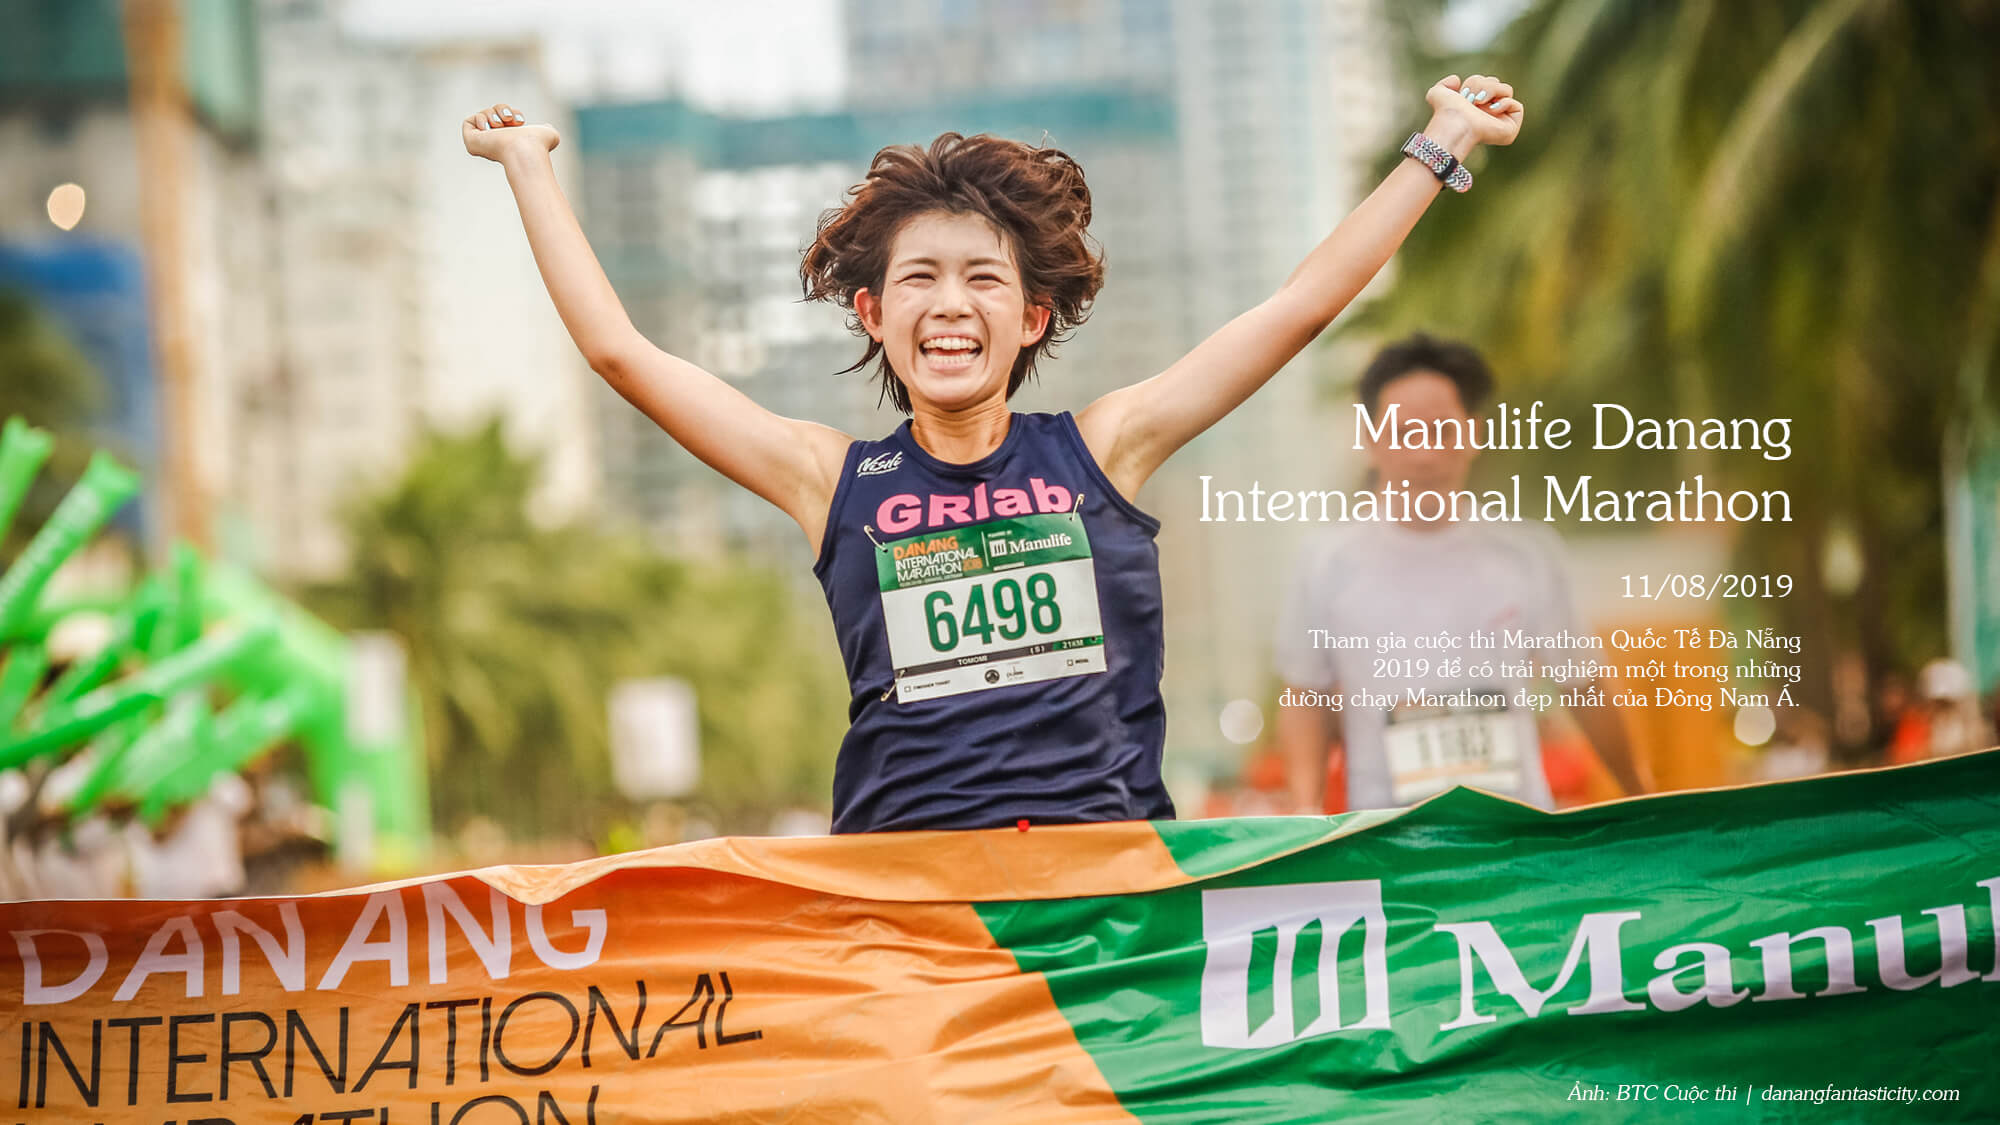 Manulife Danang International Marathon 2019